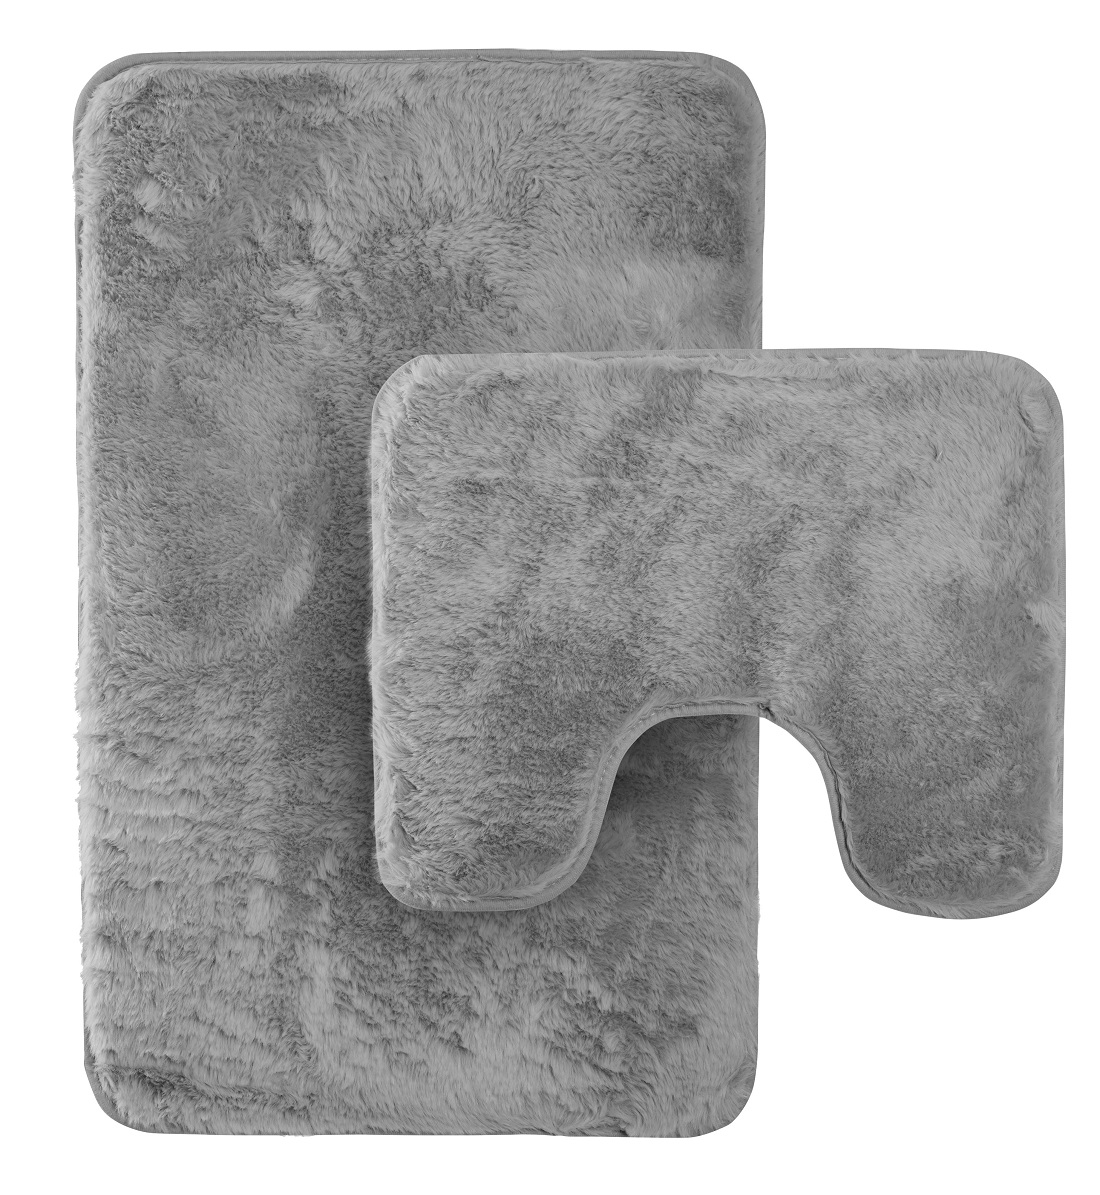 soft fluffy plush bath mat set and padestal matm 2 piece grey silver